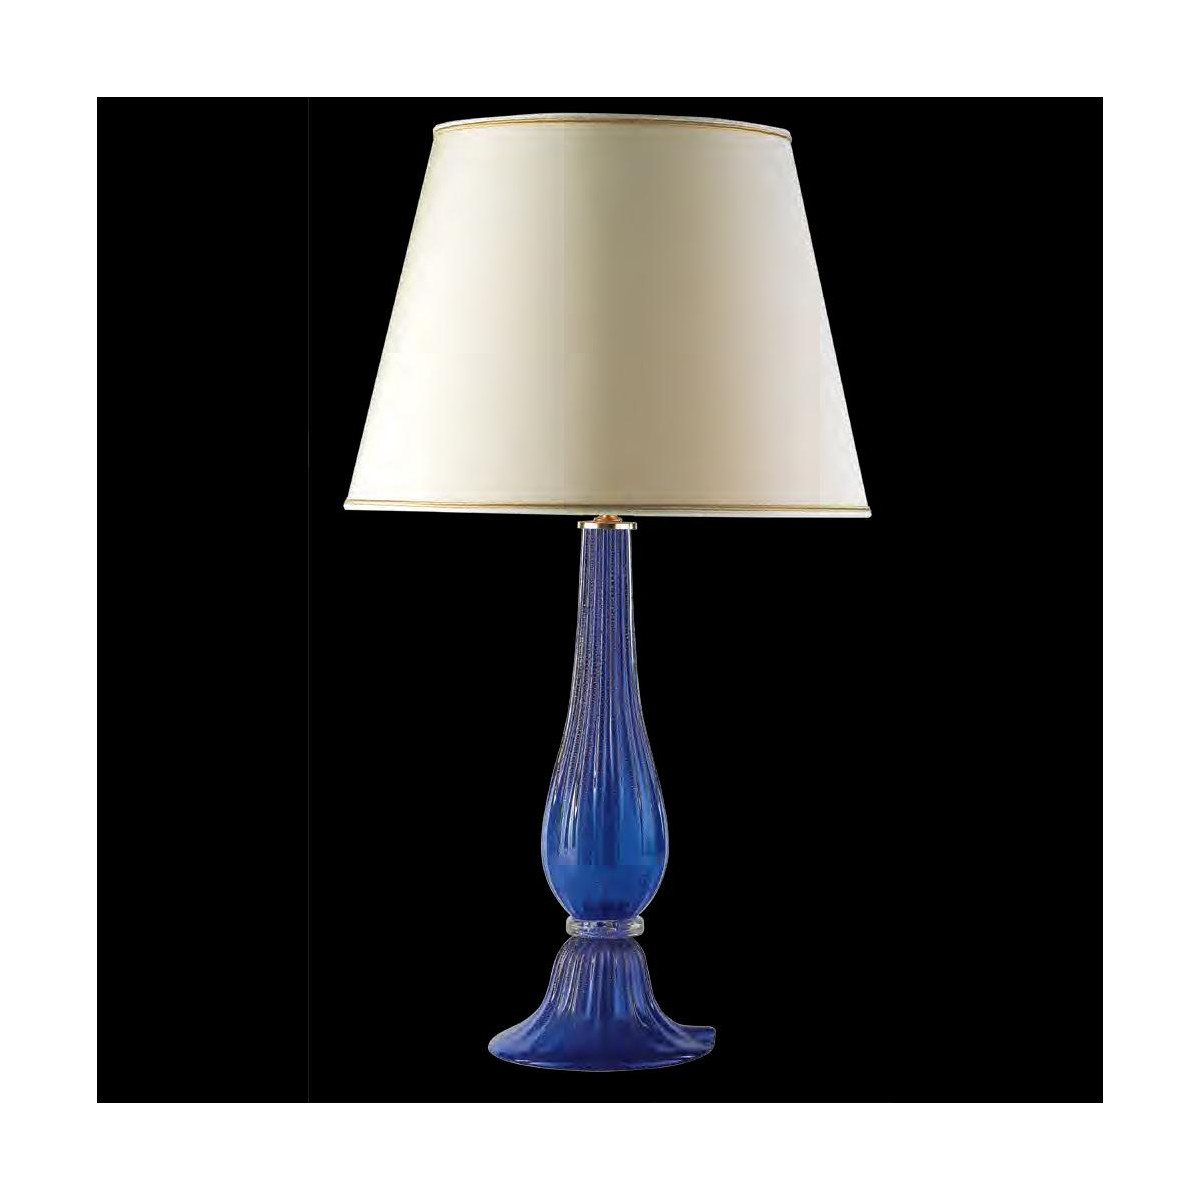 "Alfonso" lampara de sobremesa de Murano - azul - pequeño